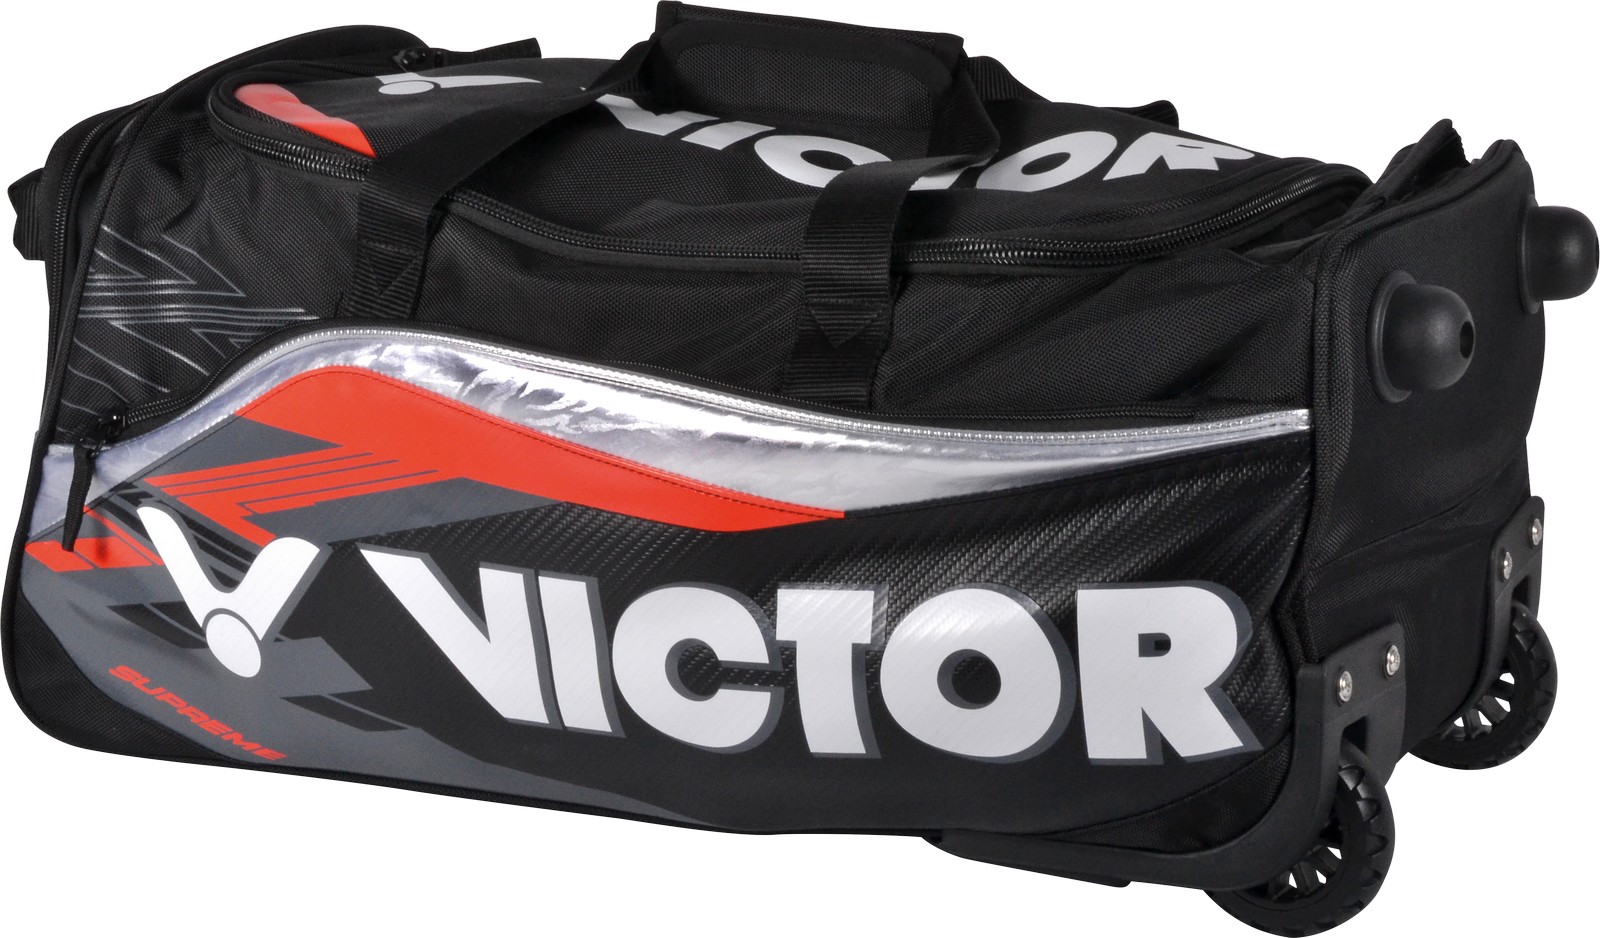 Victor Multisportbags small